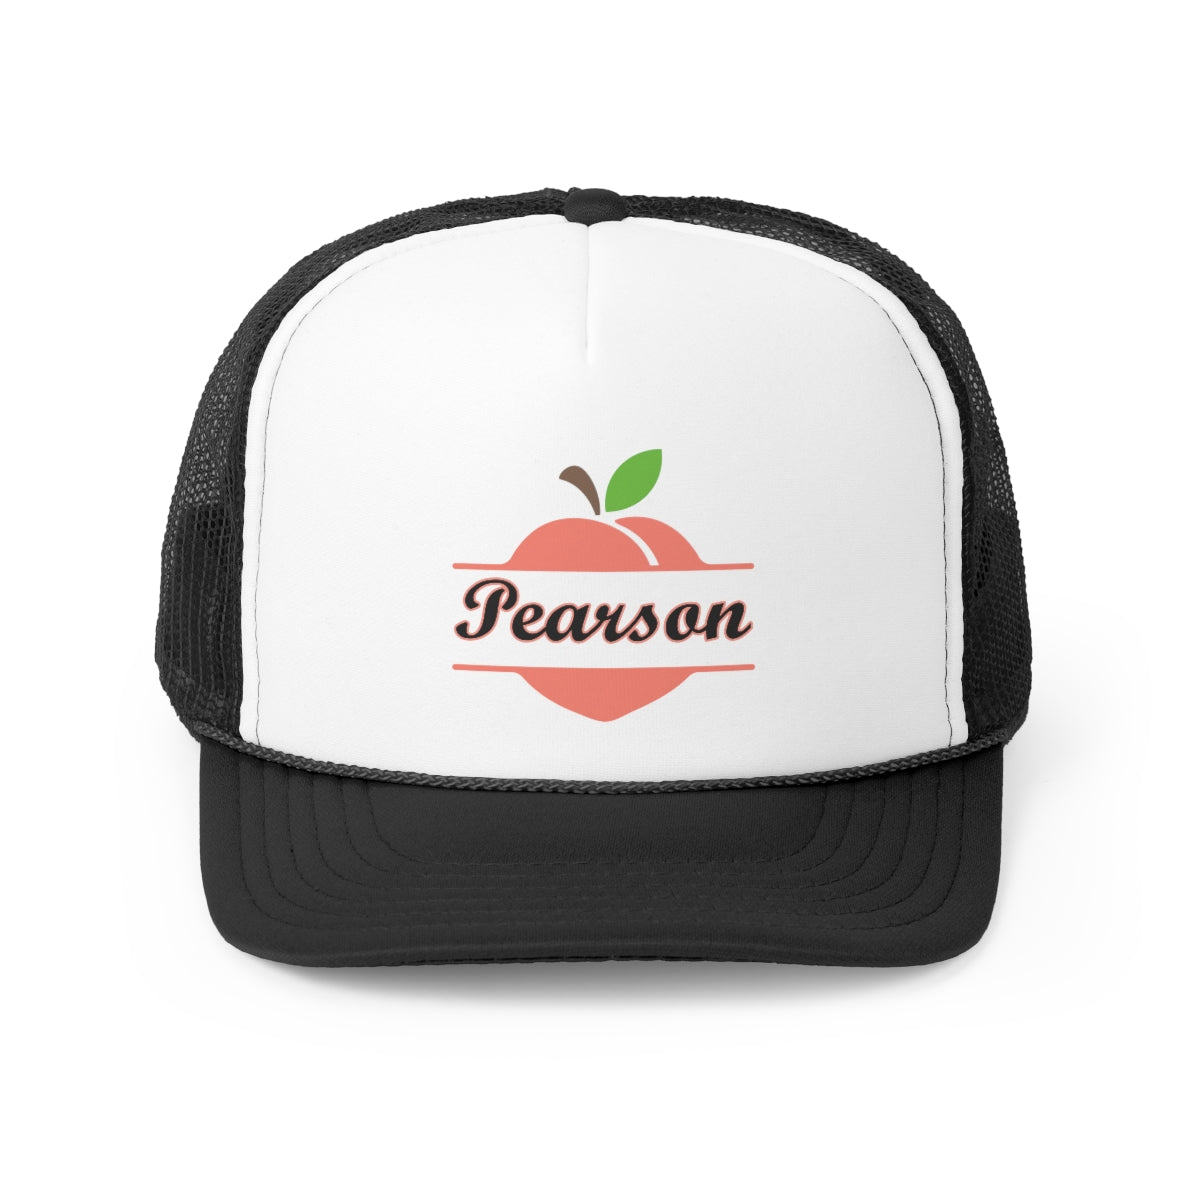 Pearson Georgia Trucker Cap